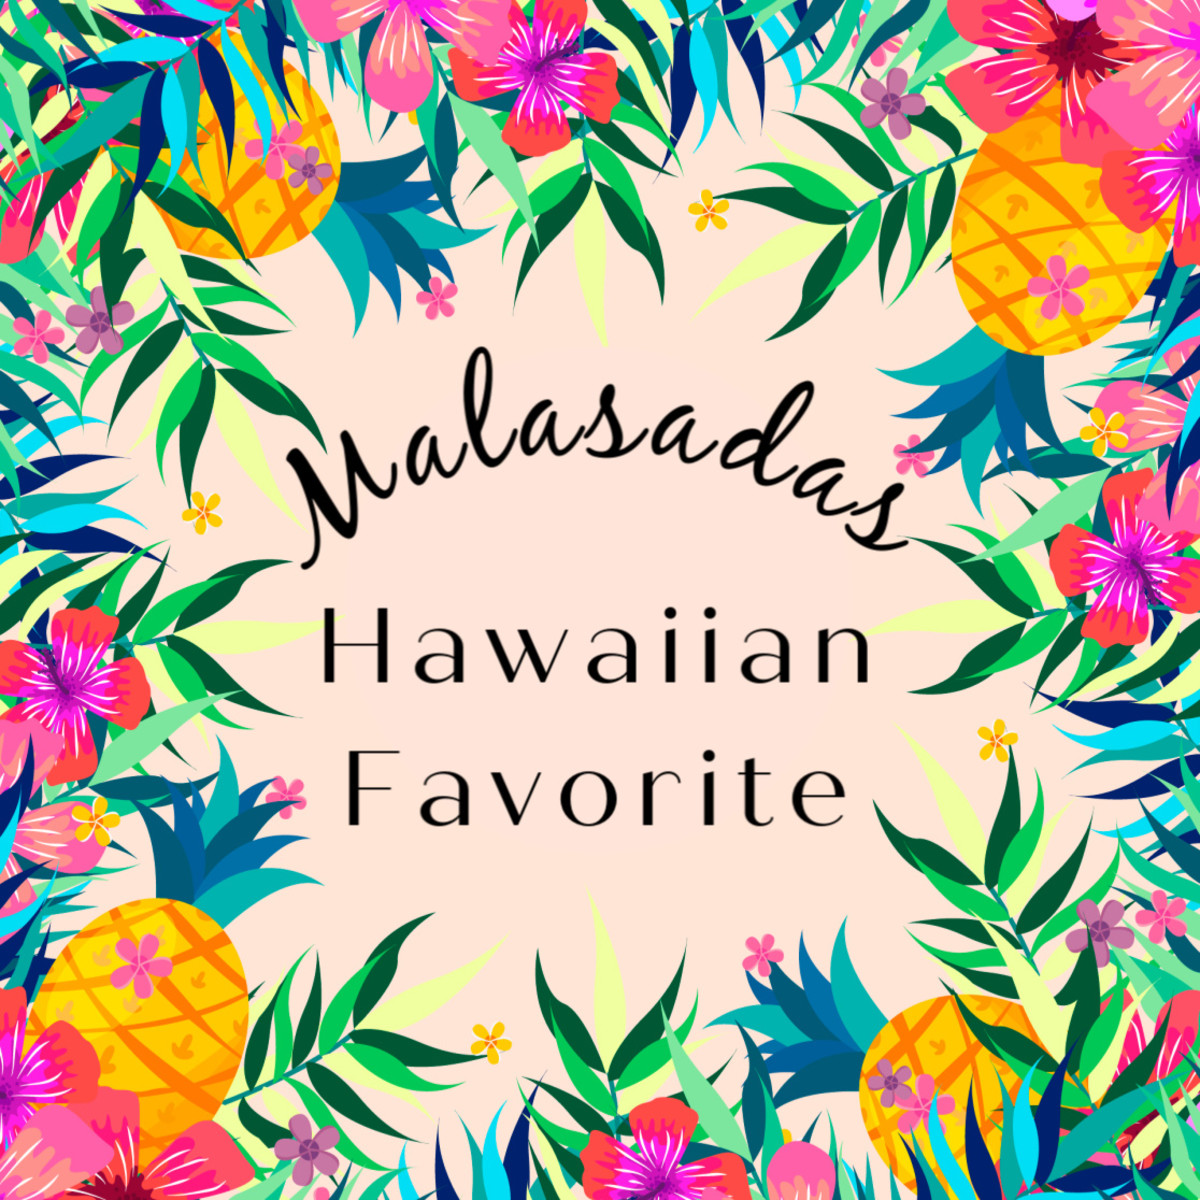 Hawaiian Favorites: Malasadas, the Portuguese Doughnut Recipe